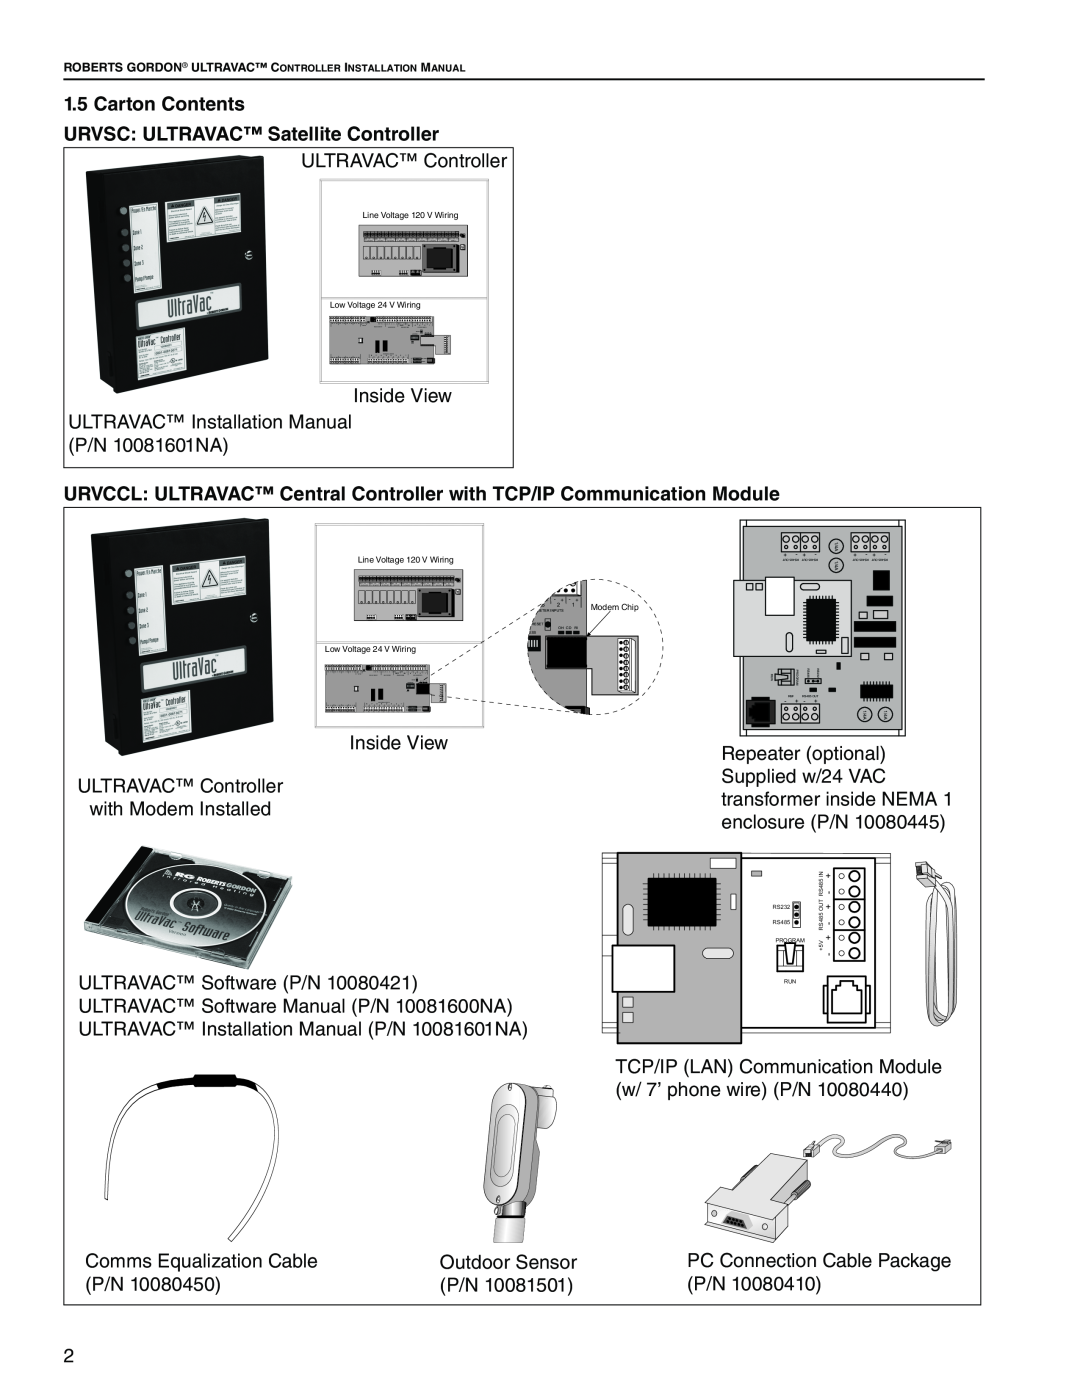 Roberts Gorden NEMA 4 installation manual Carton Contents, URVSC ULTRAVAC Satellite Controller 